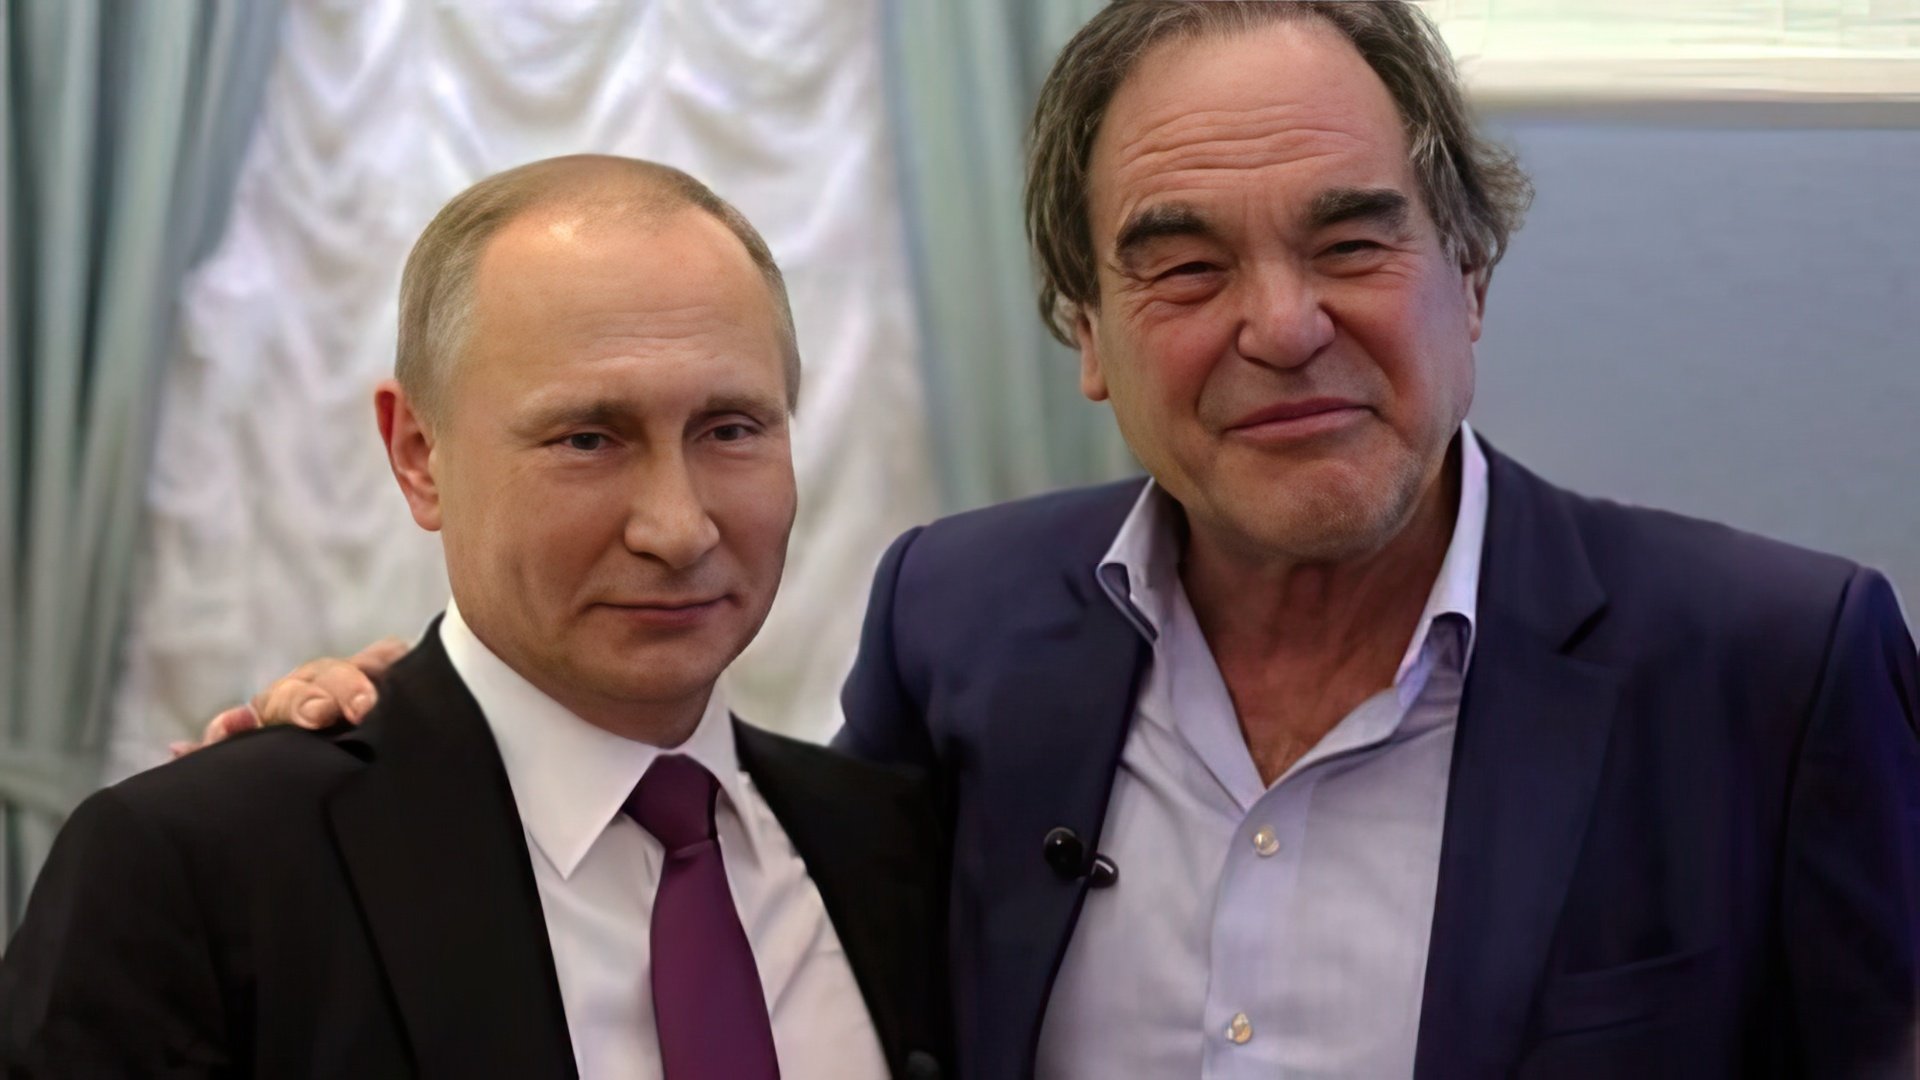  Oliver Stone and Vladimir Putin